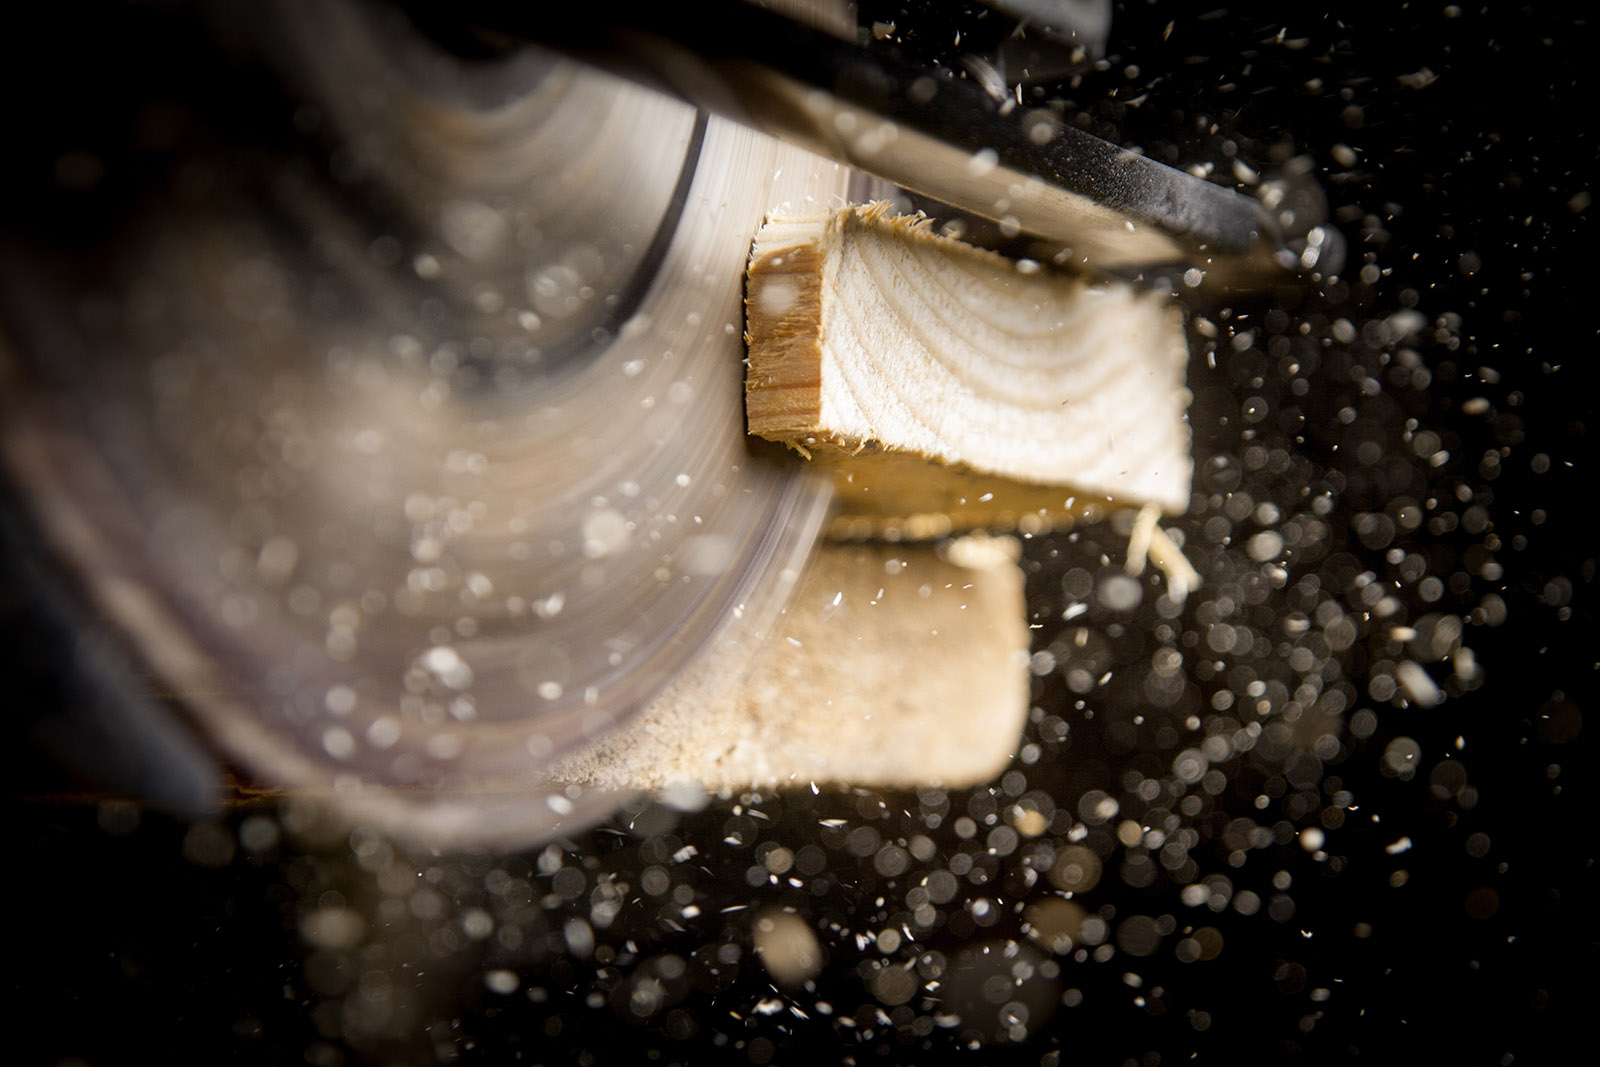 Close-up of carpenter cutting a wooden plank